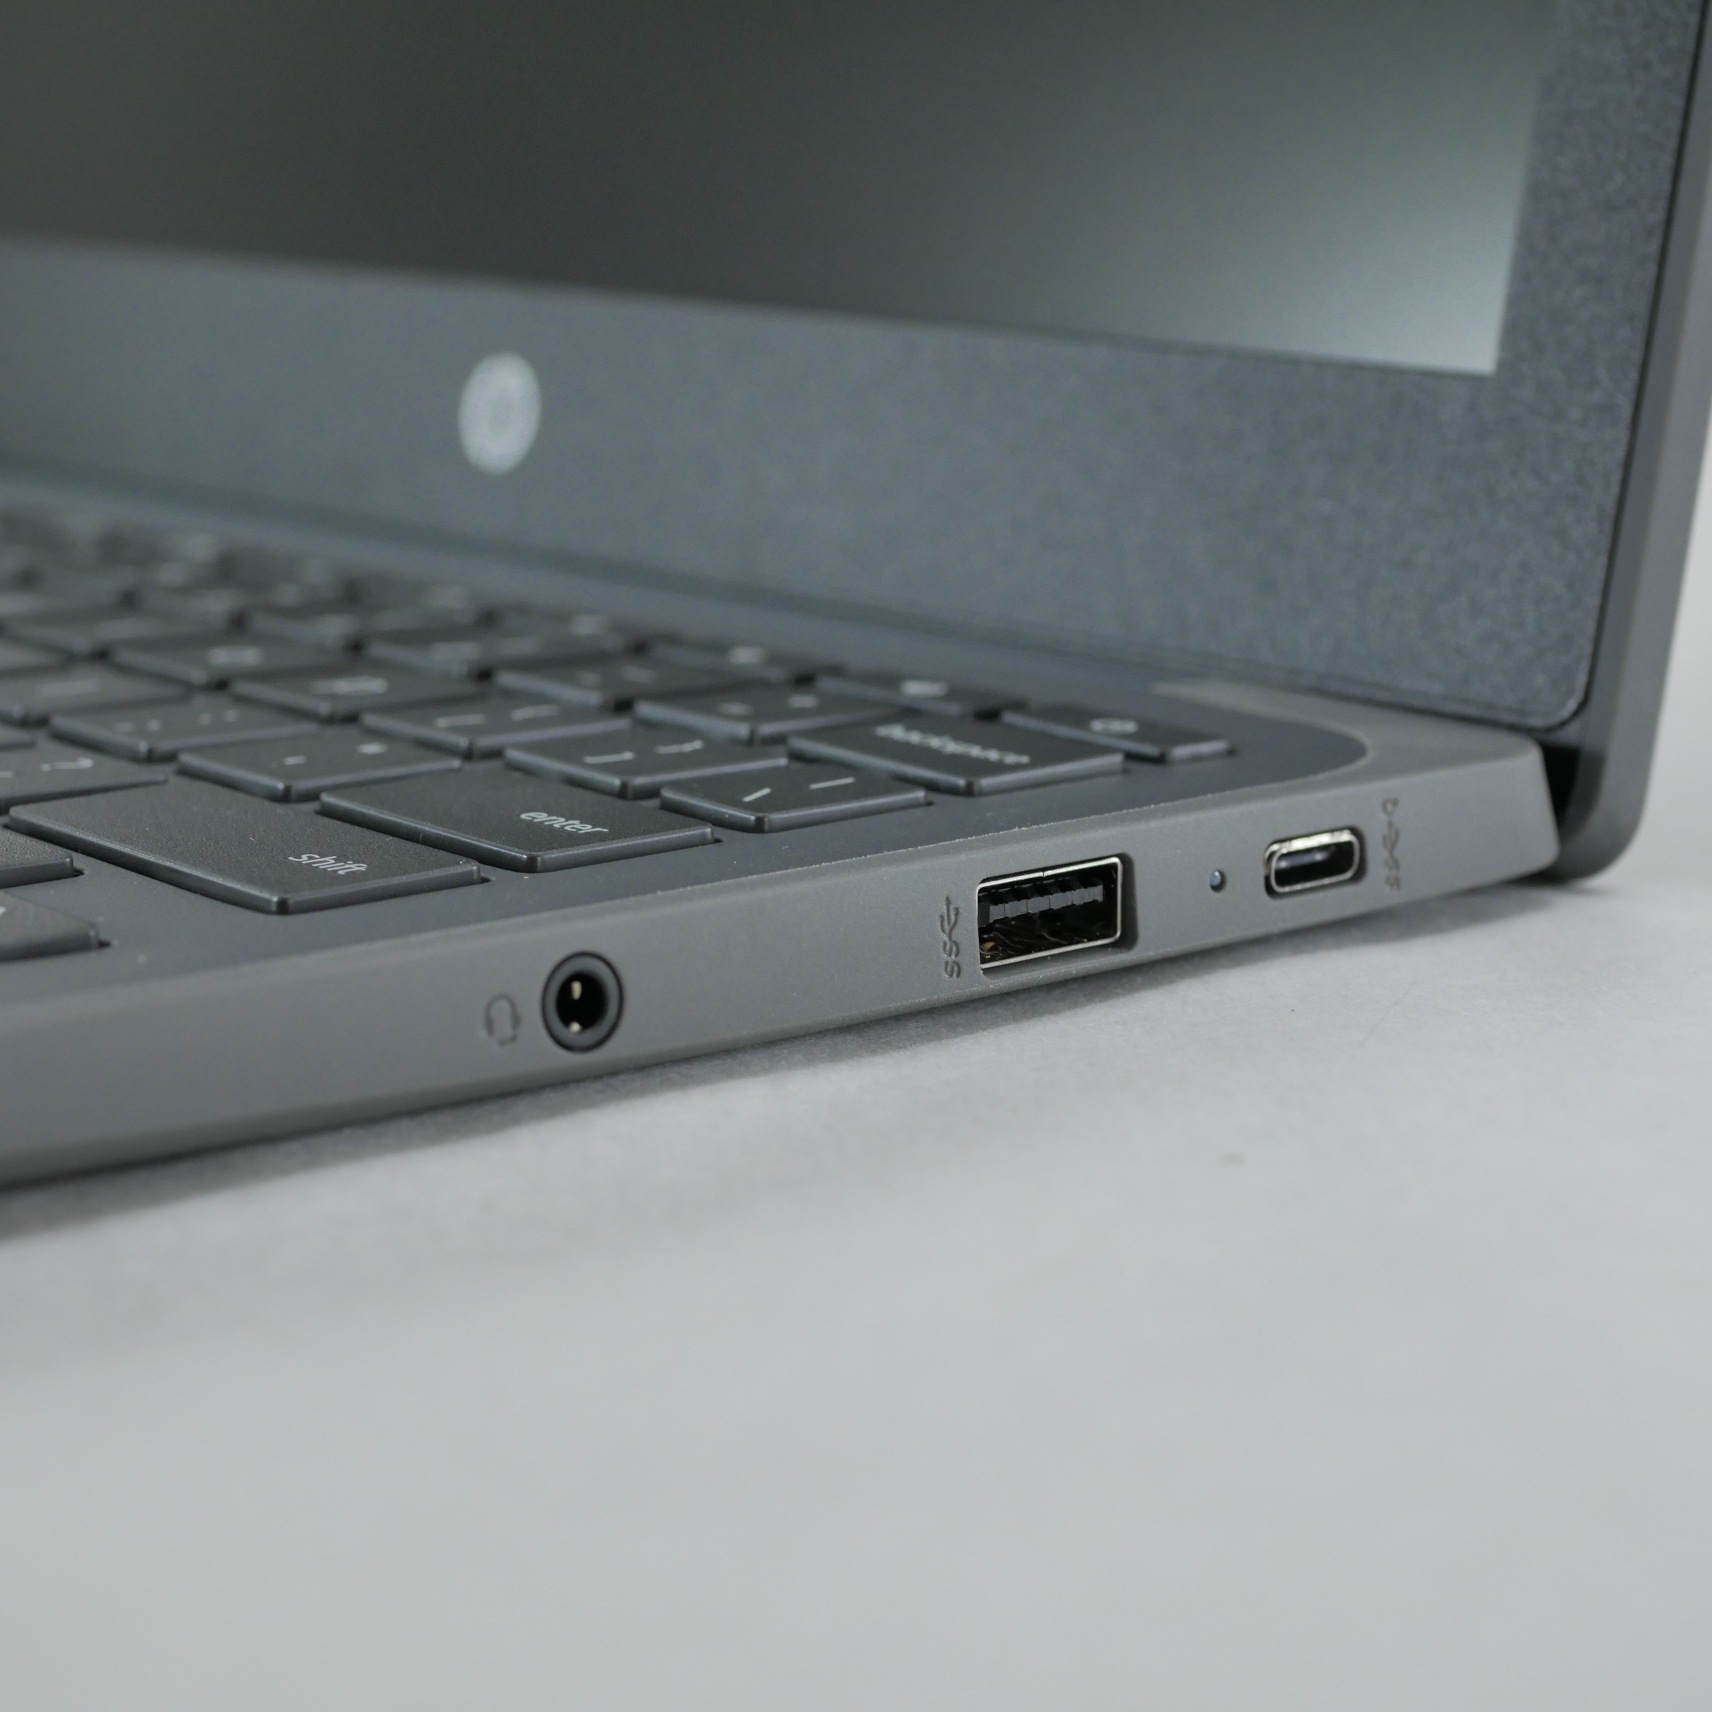 HP Chromebook 11 G8 EE 11.6" Celeron N4020 1.1GHz RAM 4Gb eMMC 32Gb 436B4UT#ABA